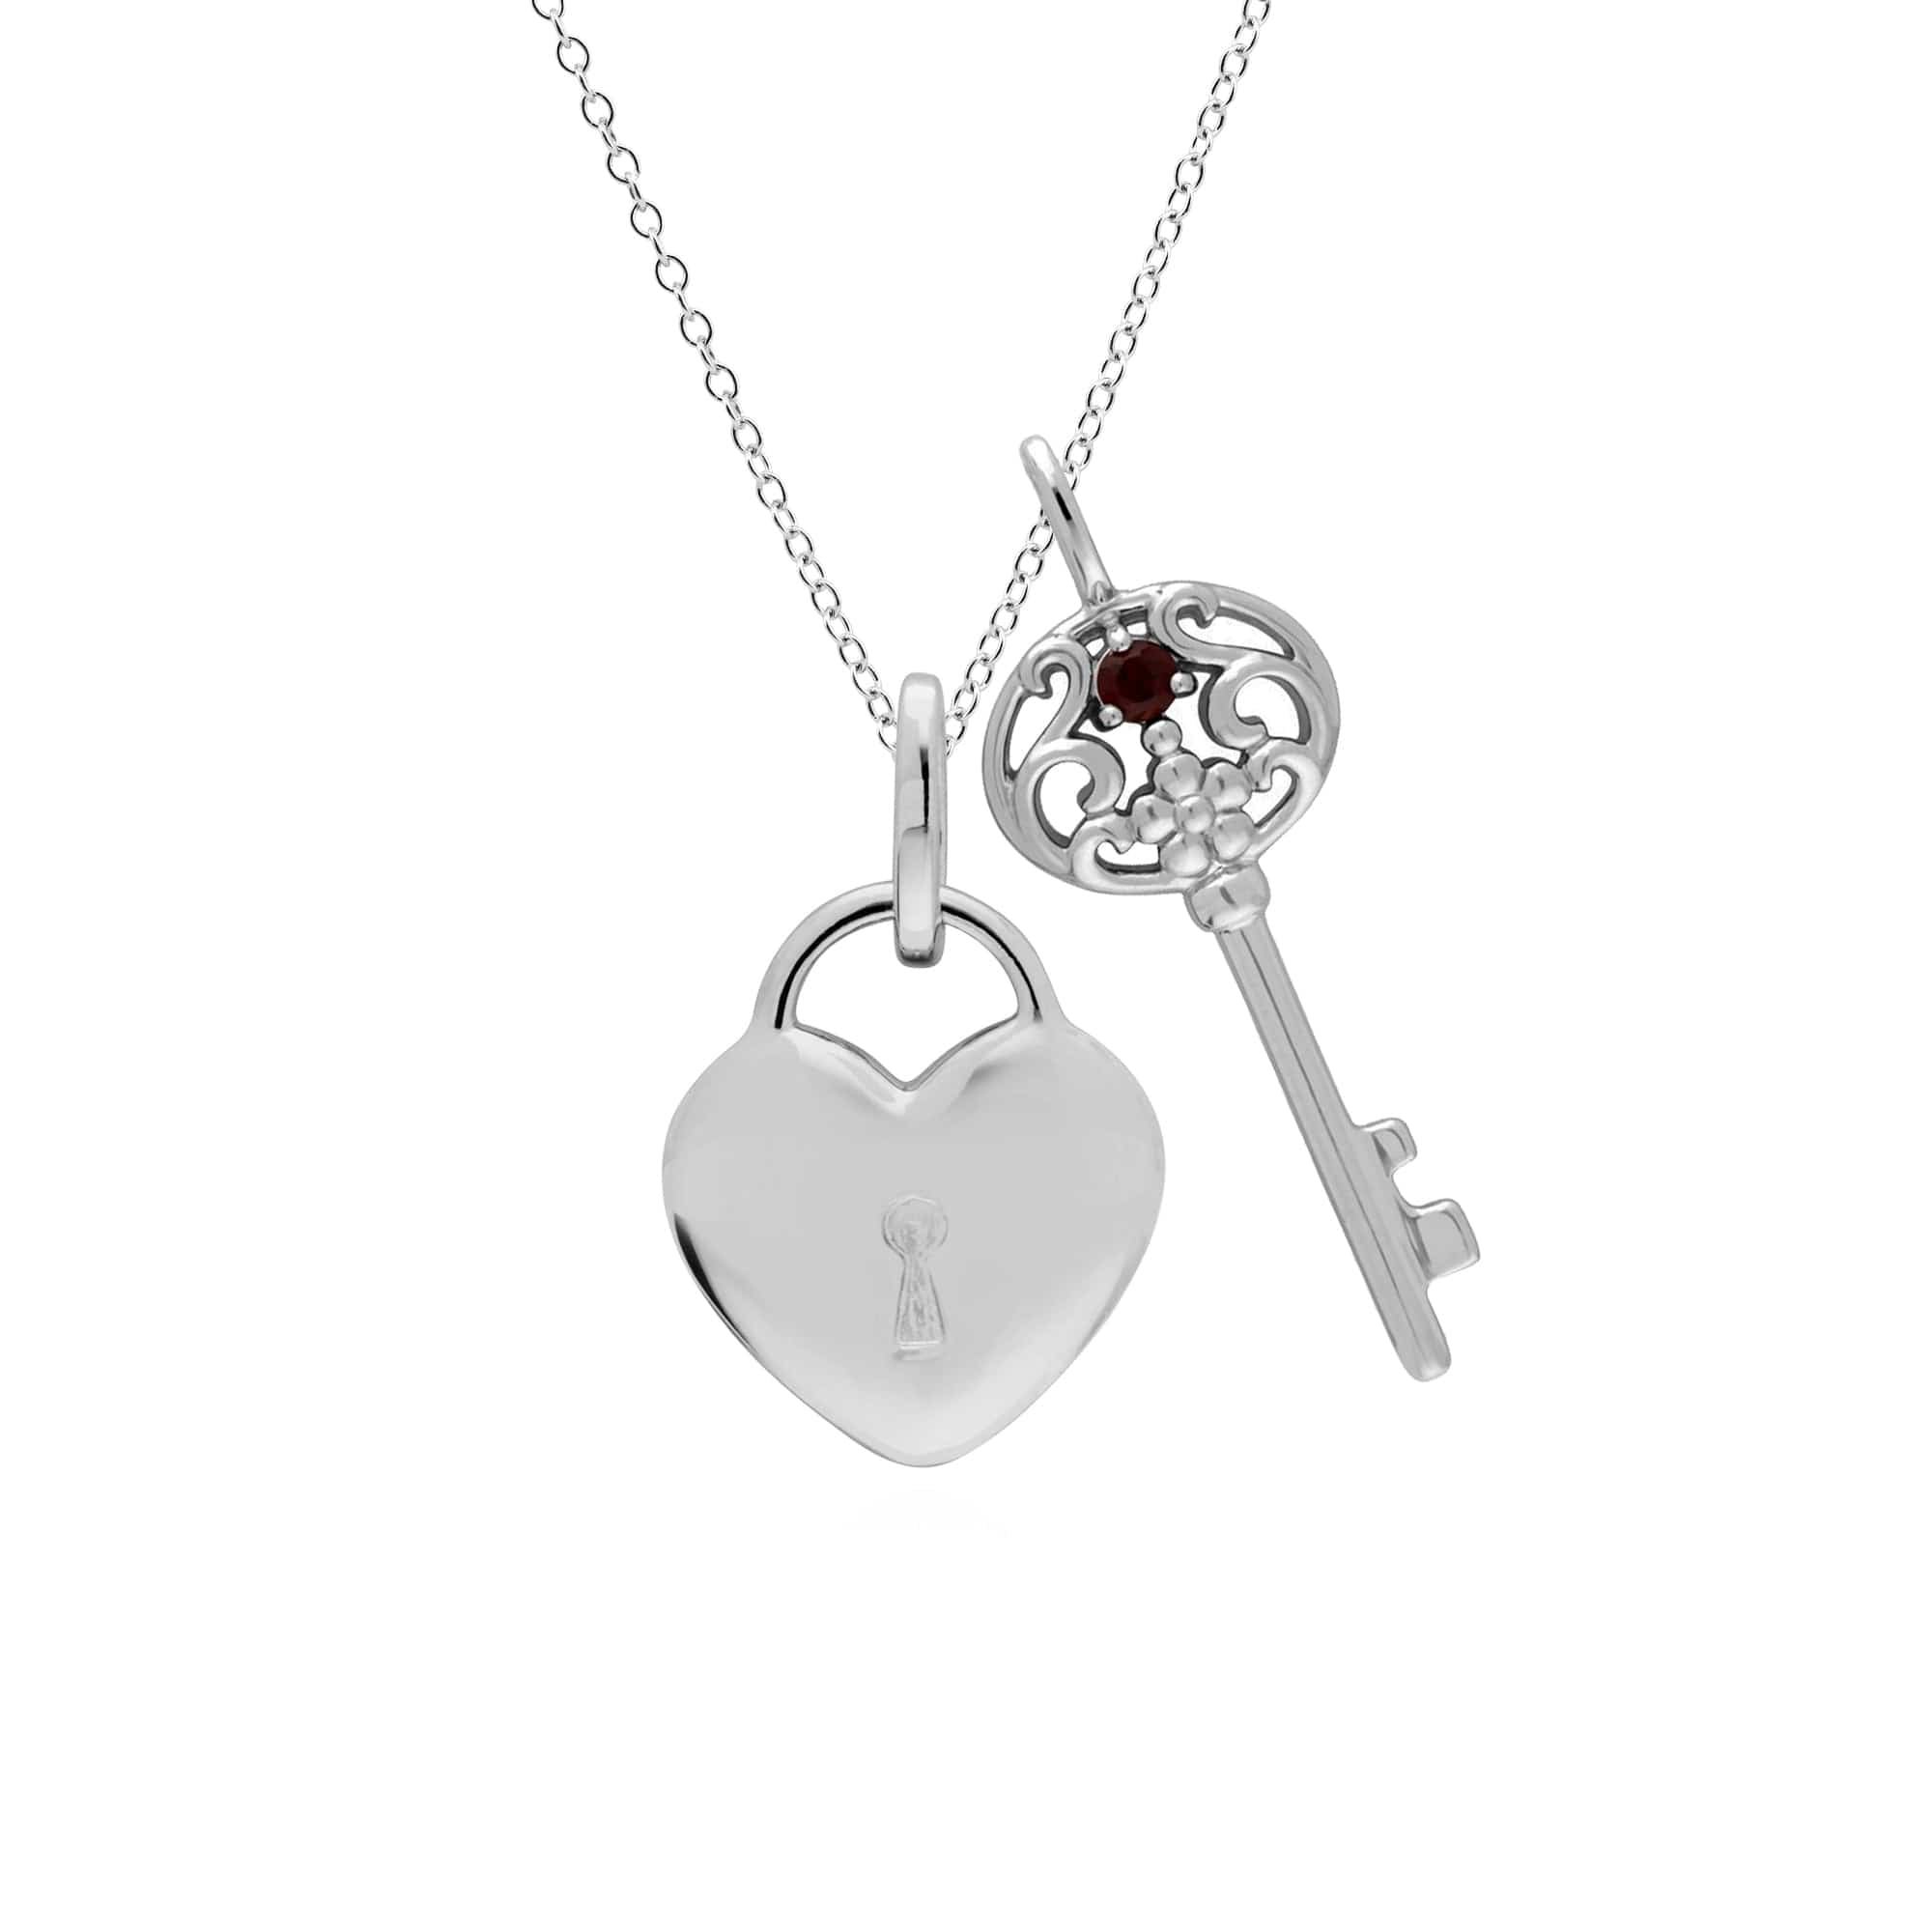 270P026801925-270P027001925 Classic Heart Lock Pendant & Garnet Big Key Charm in 925 Sterling Silver 1